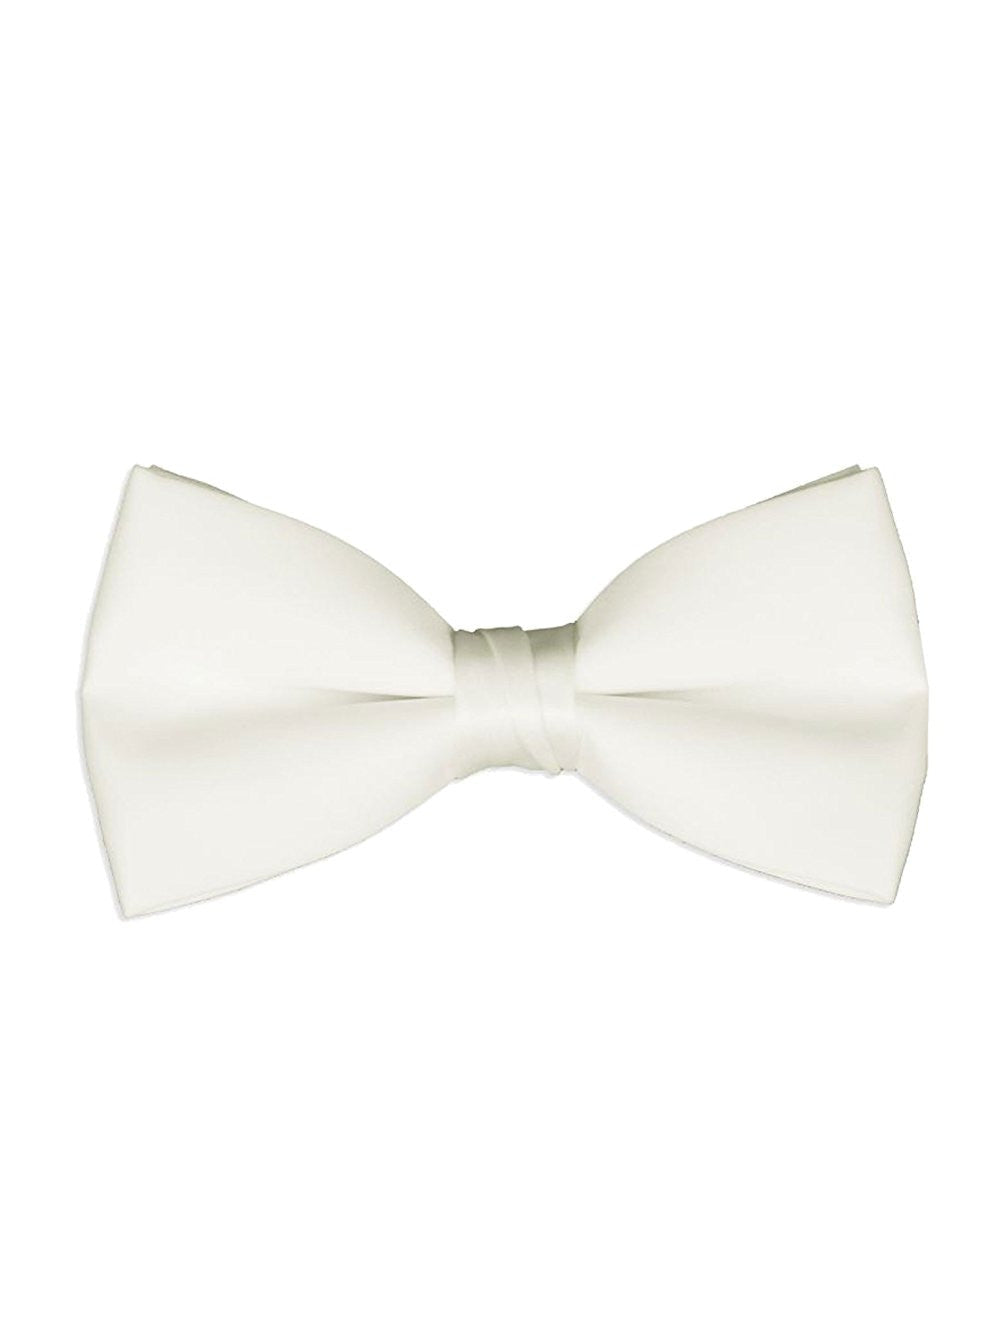 Men's Classic Pre-Tied Formal Tuxedo Bow Tie - Ivory